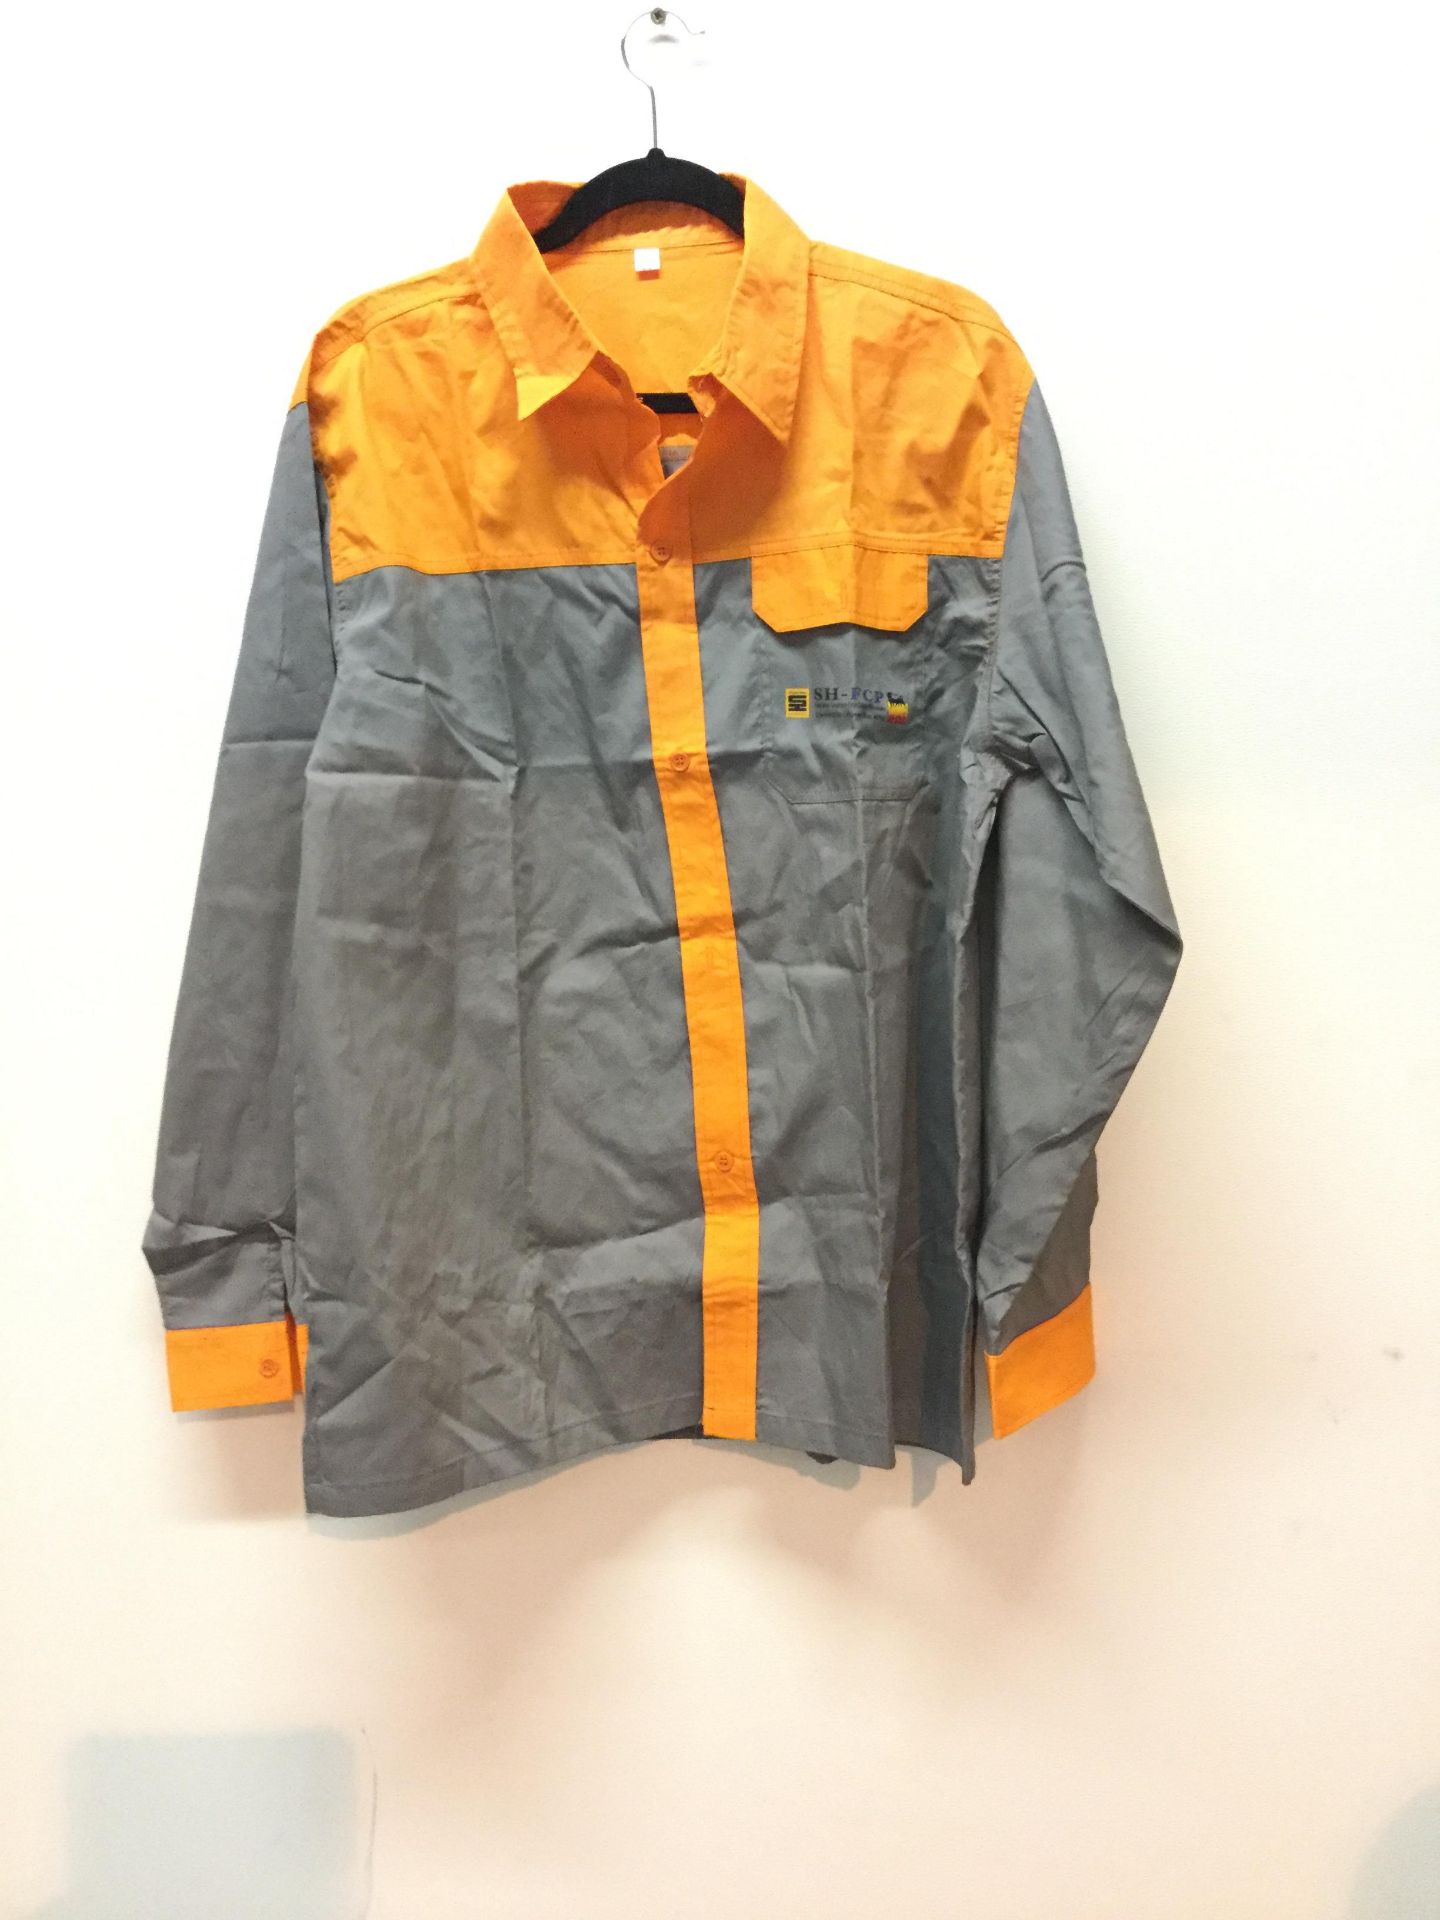 Summer Long Sleeve Work Shirt - Size 58 - Image 2 of 2